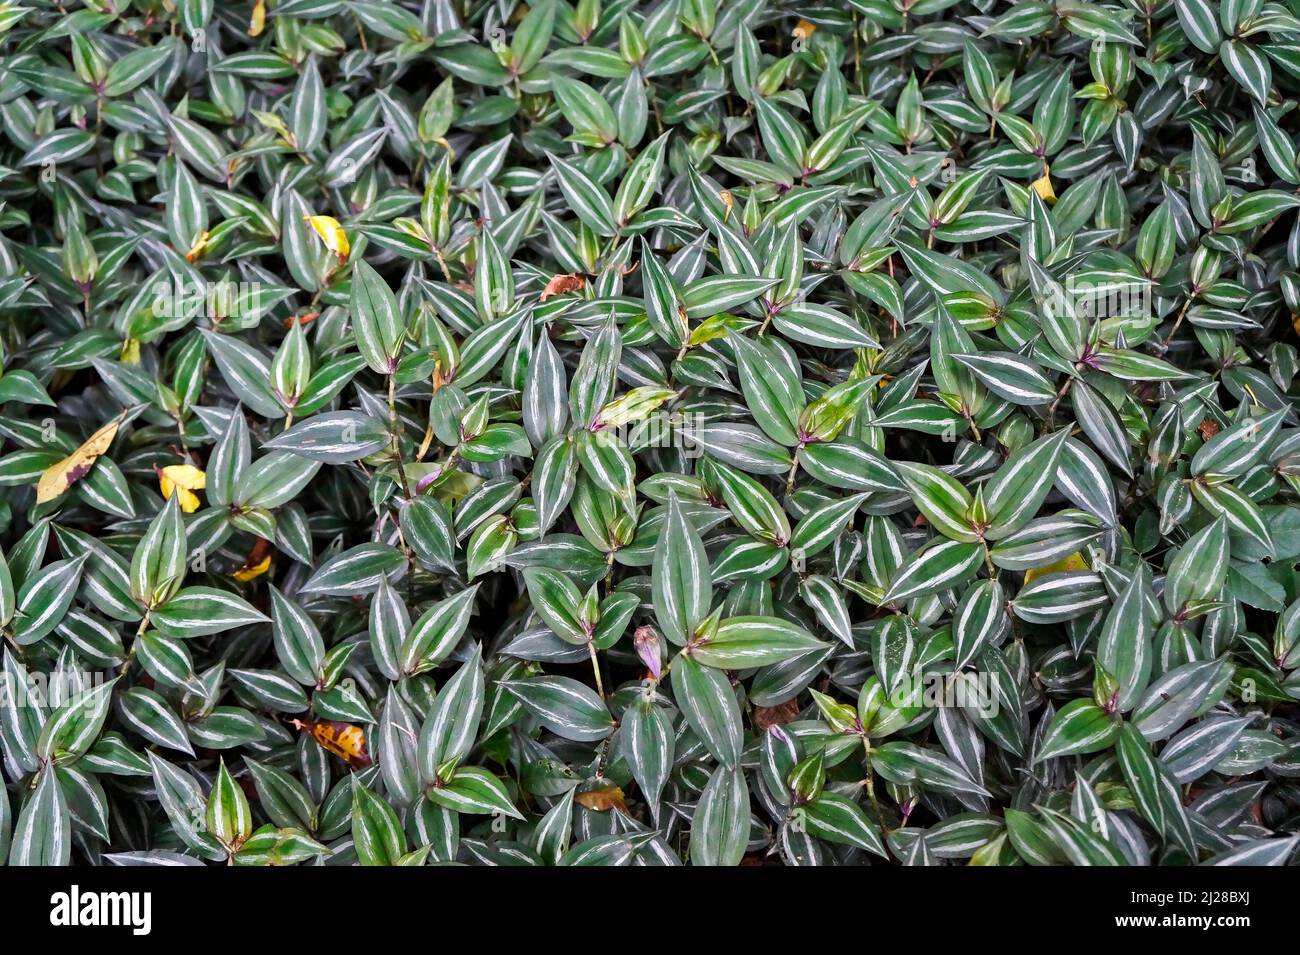 Inchplant or wandering jew (Tradescantia zebrina) Stock Photo